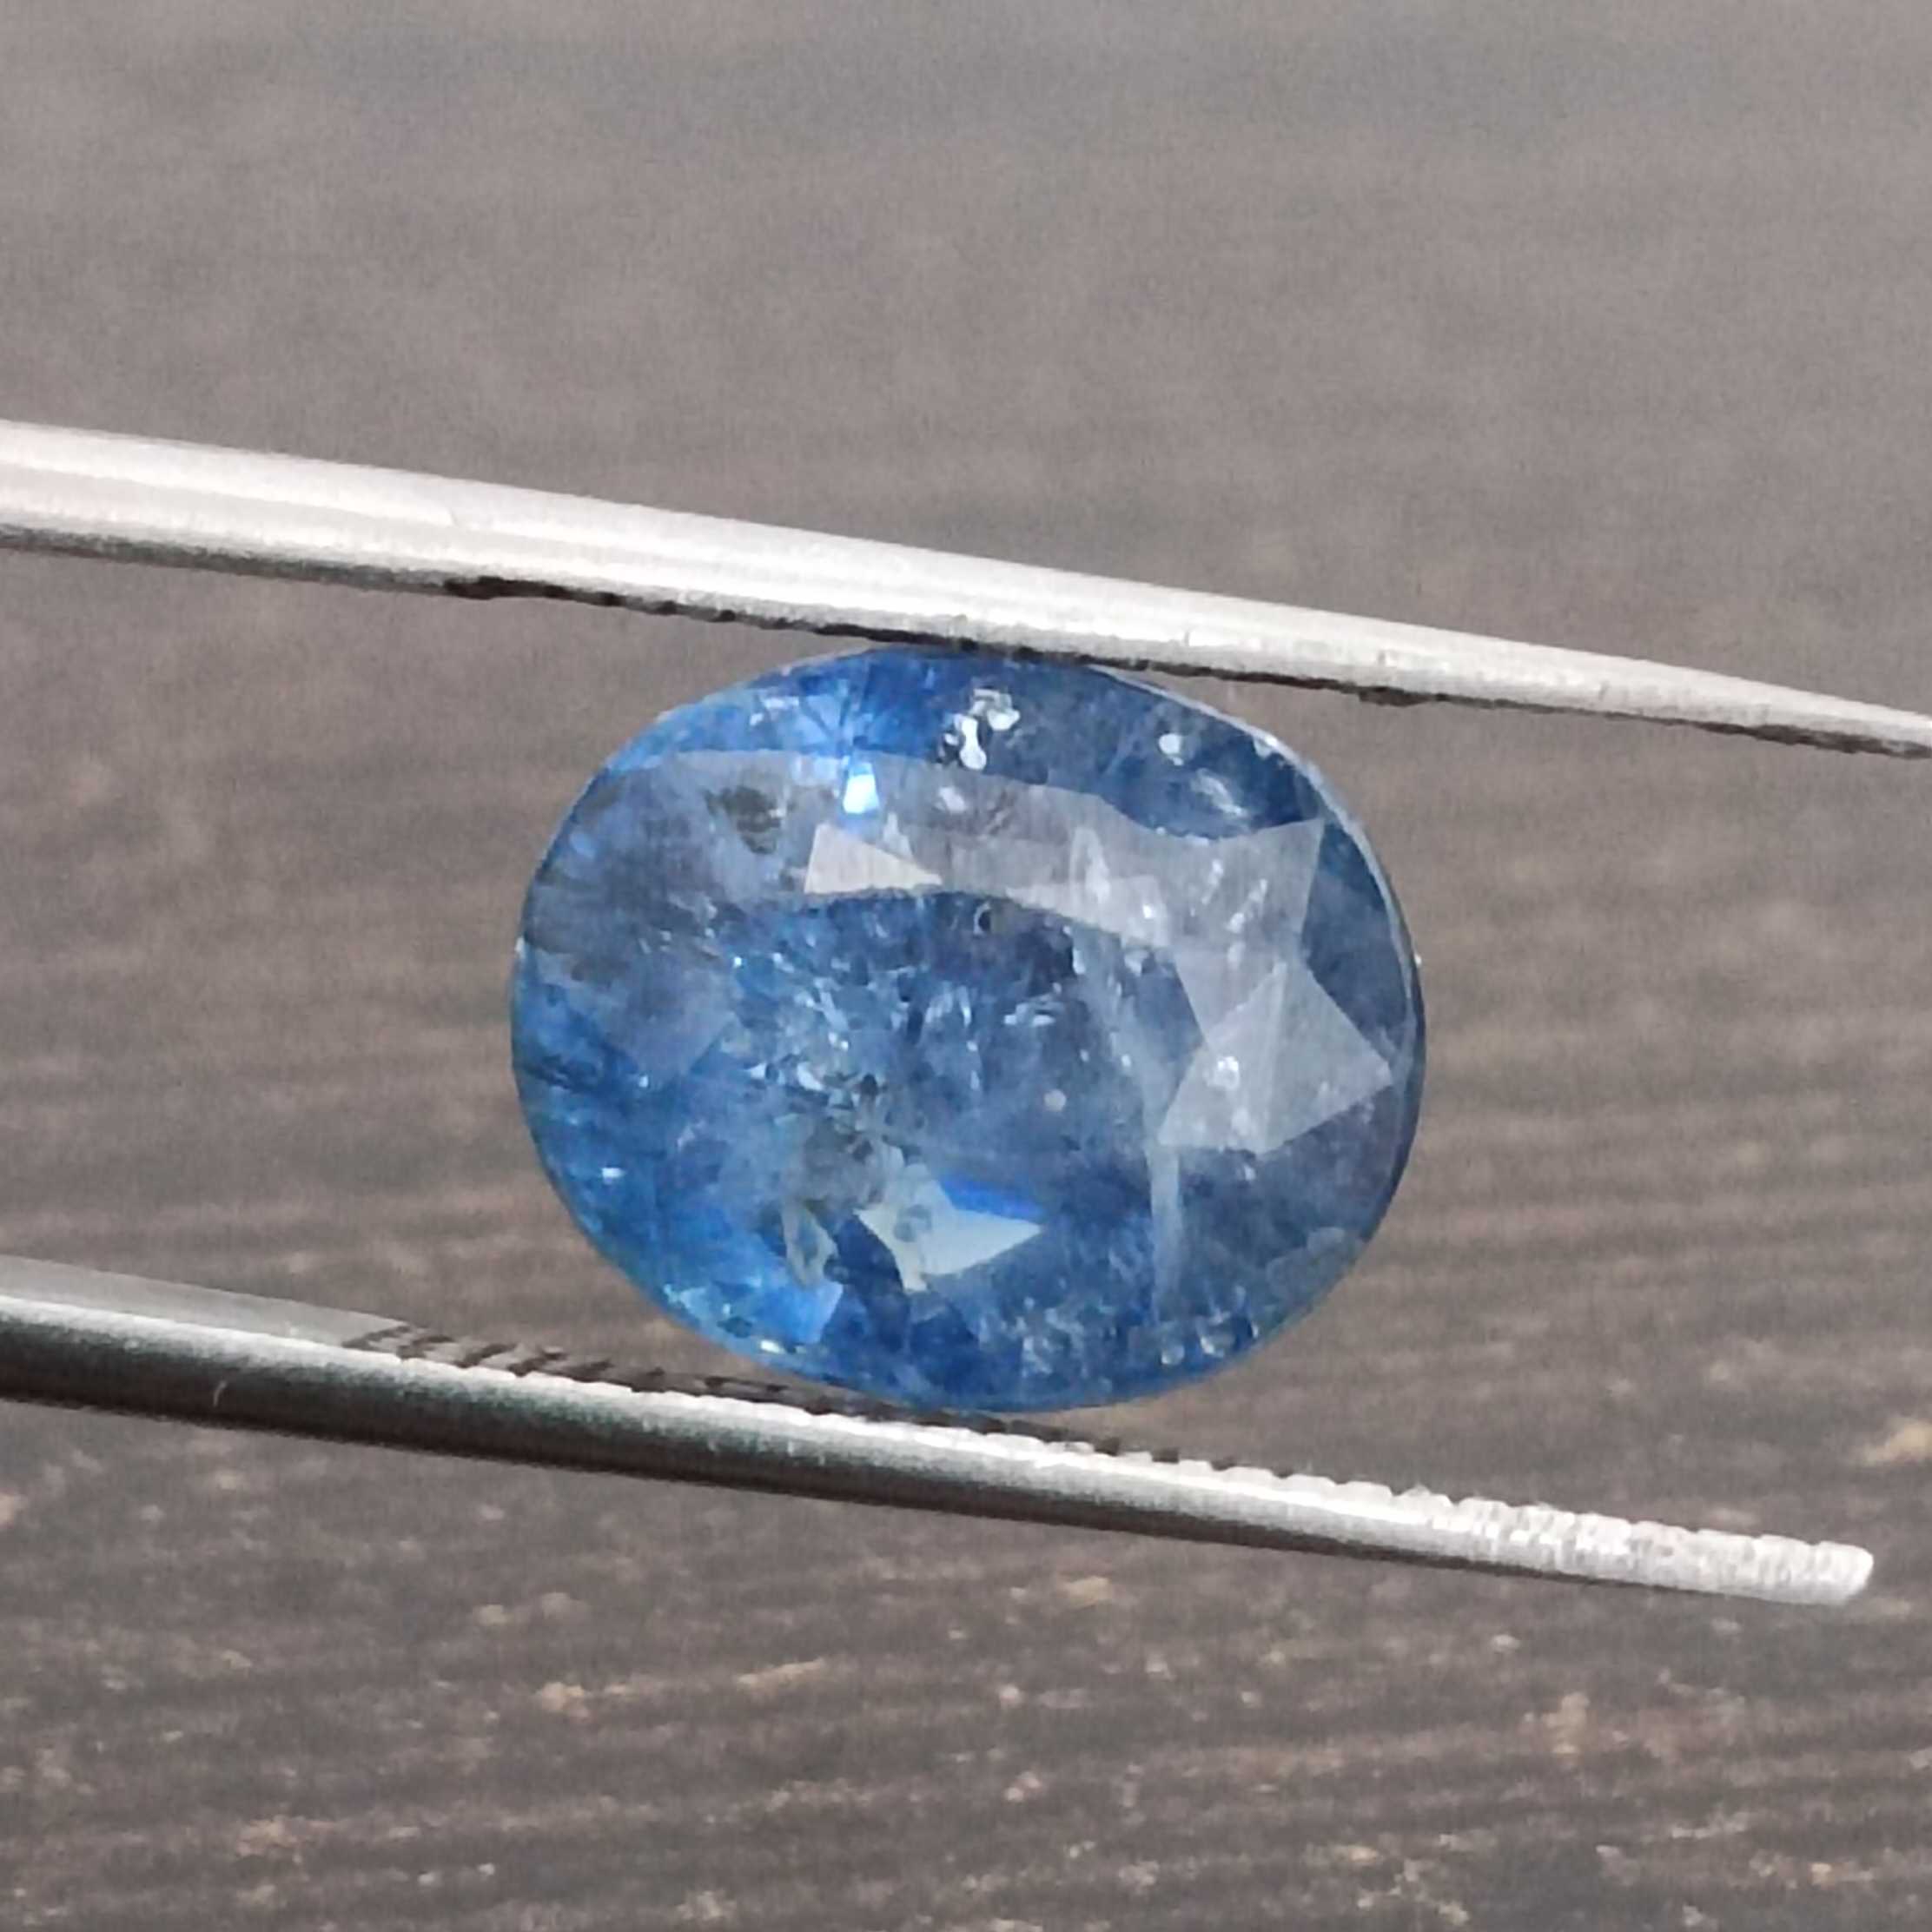 4.25ct IGI certified cobalt blue oval cut sapphire gem/